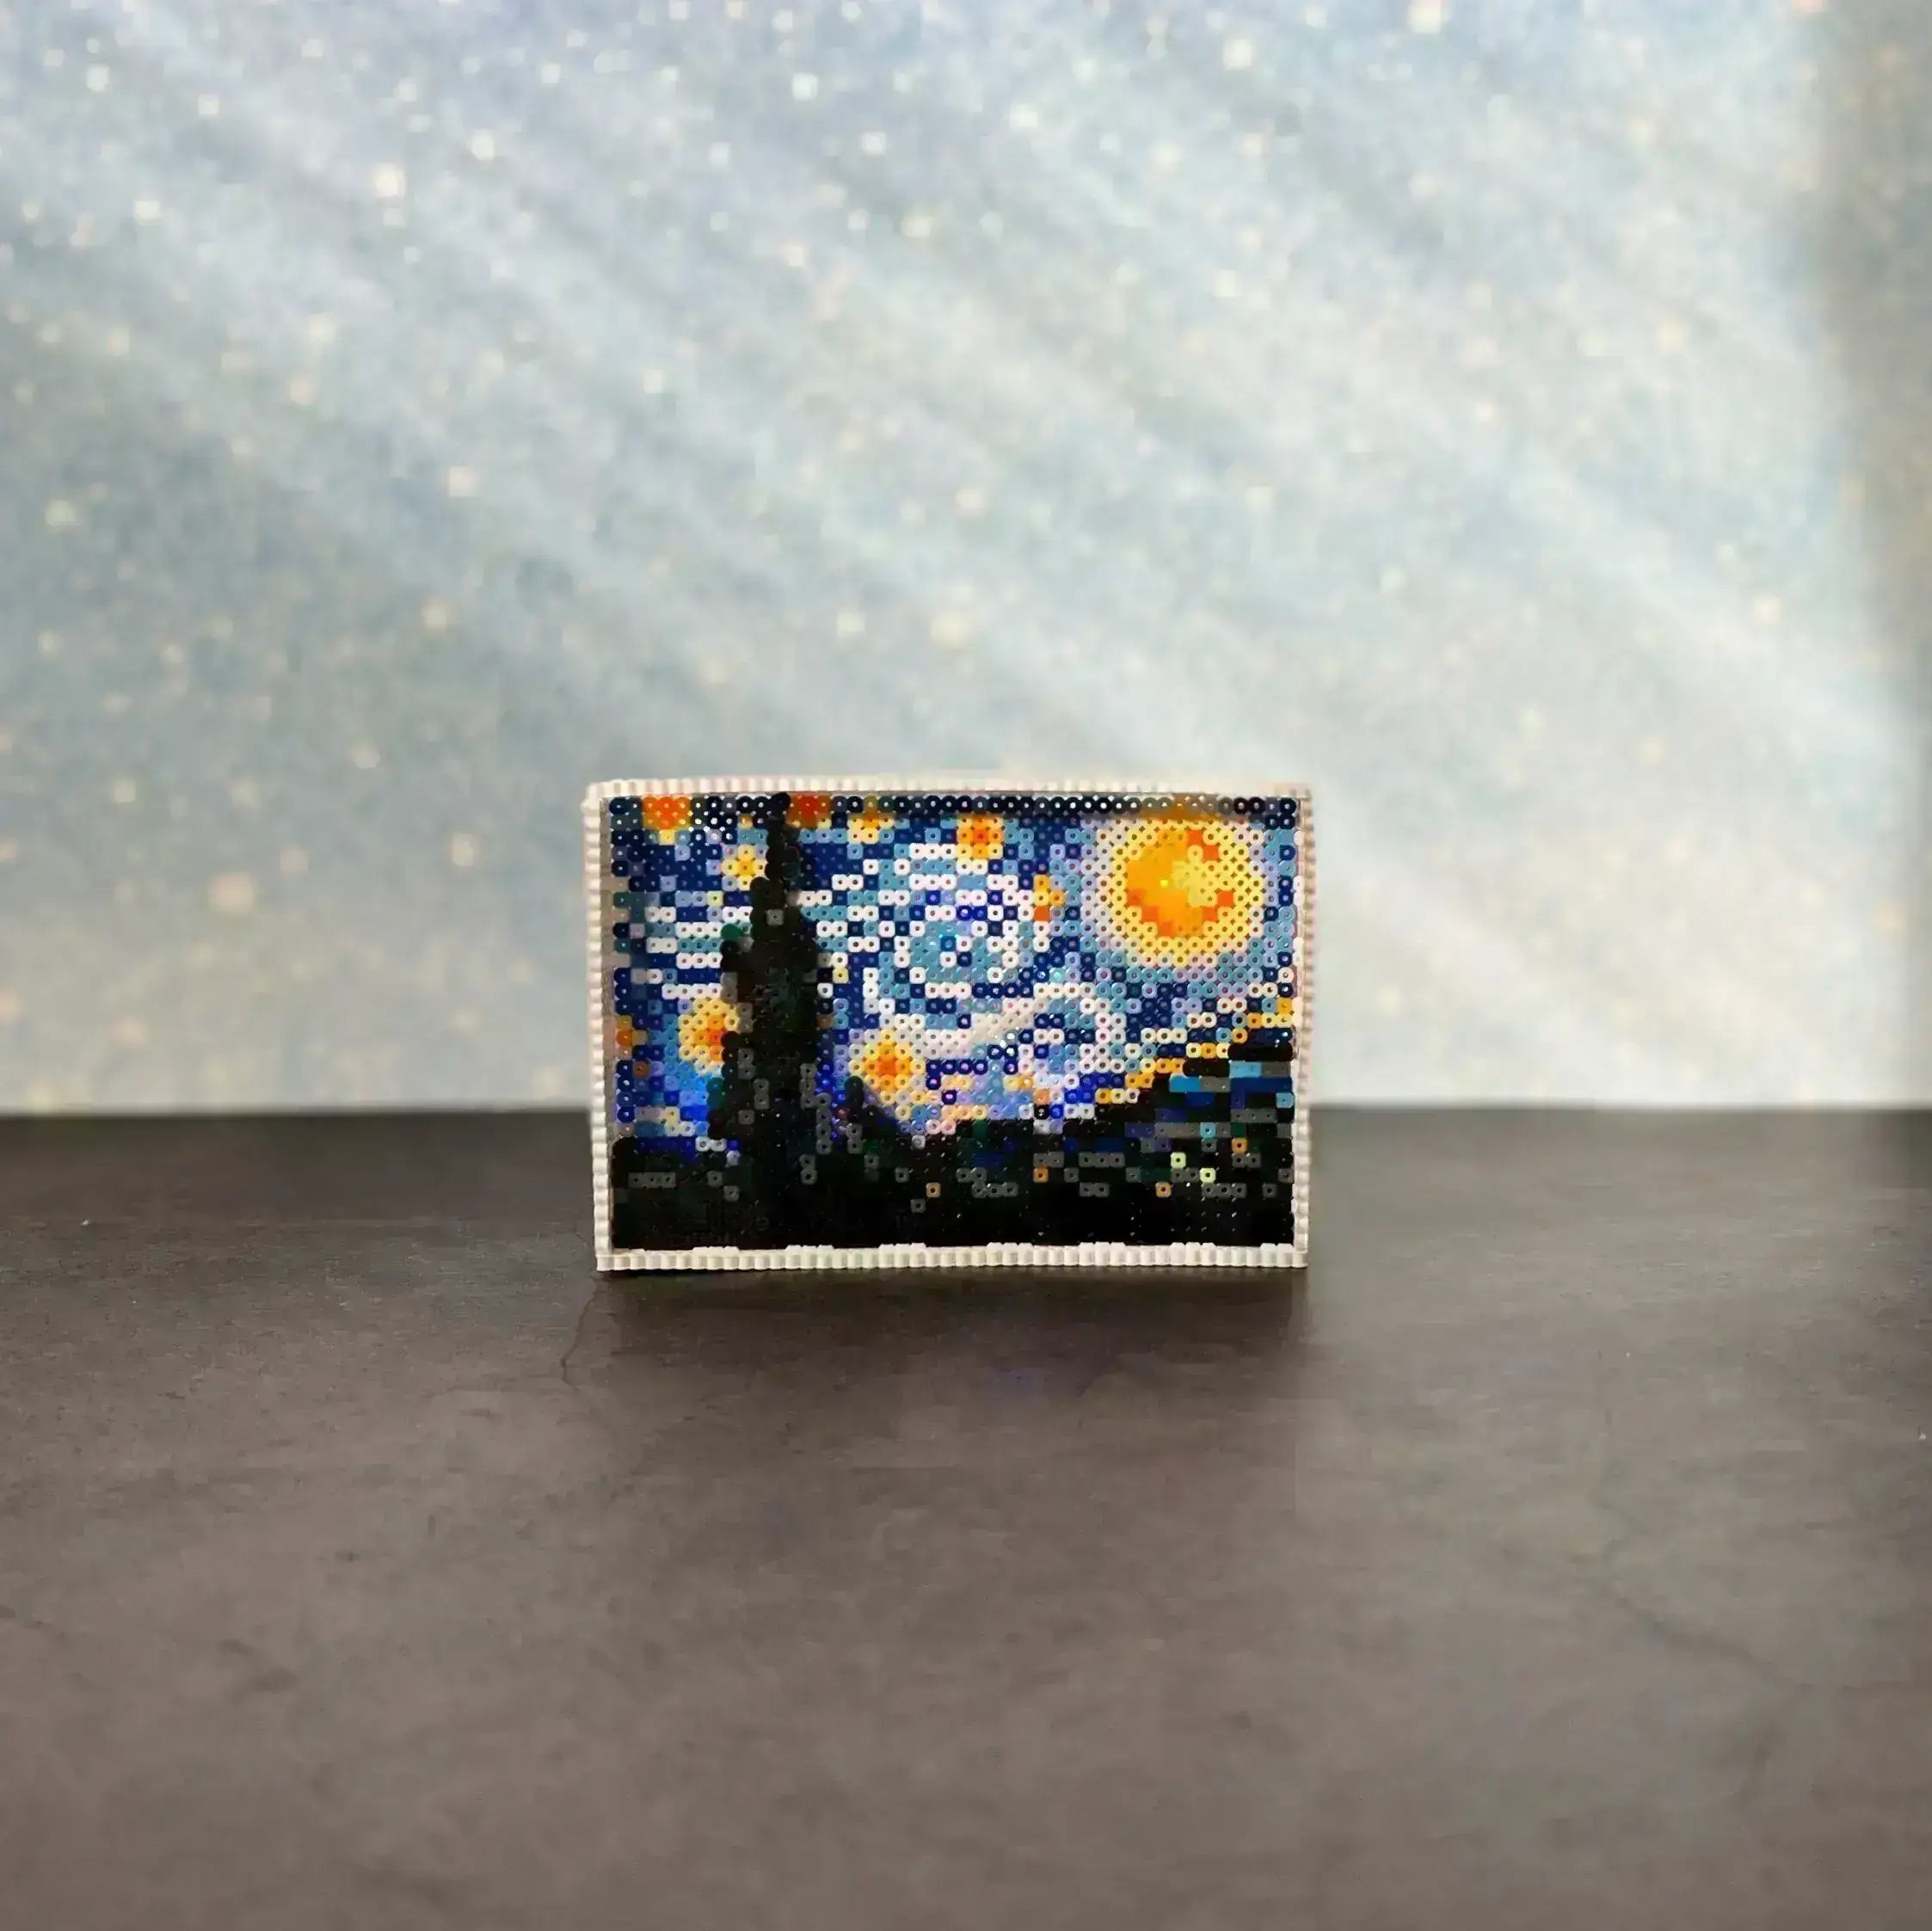 The Starry Night - van gogh - 3D fuse Beads set - 2.6mm Iron Beads